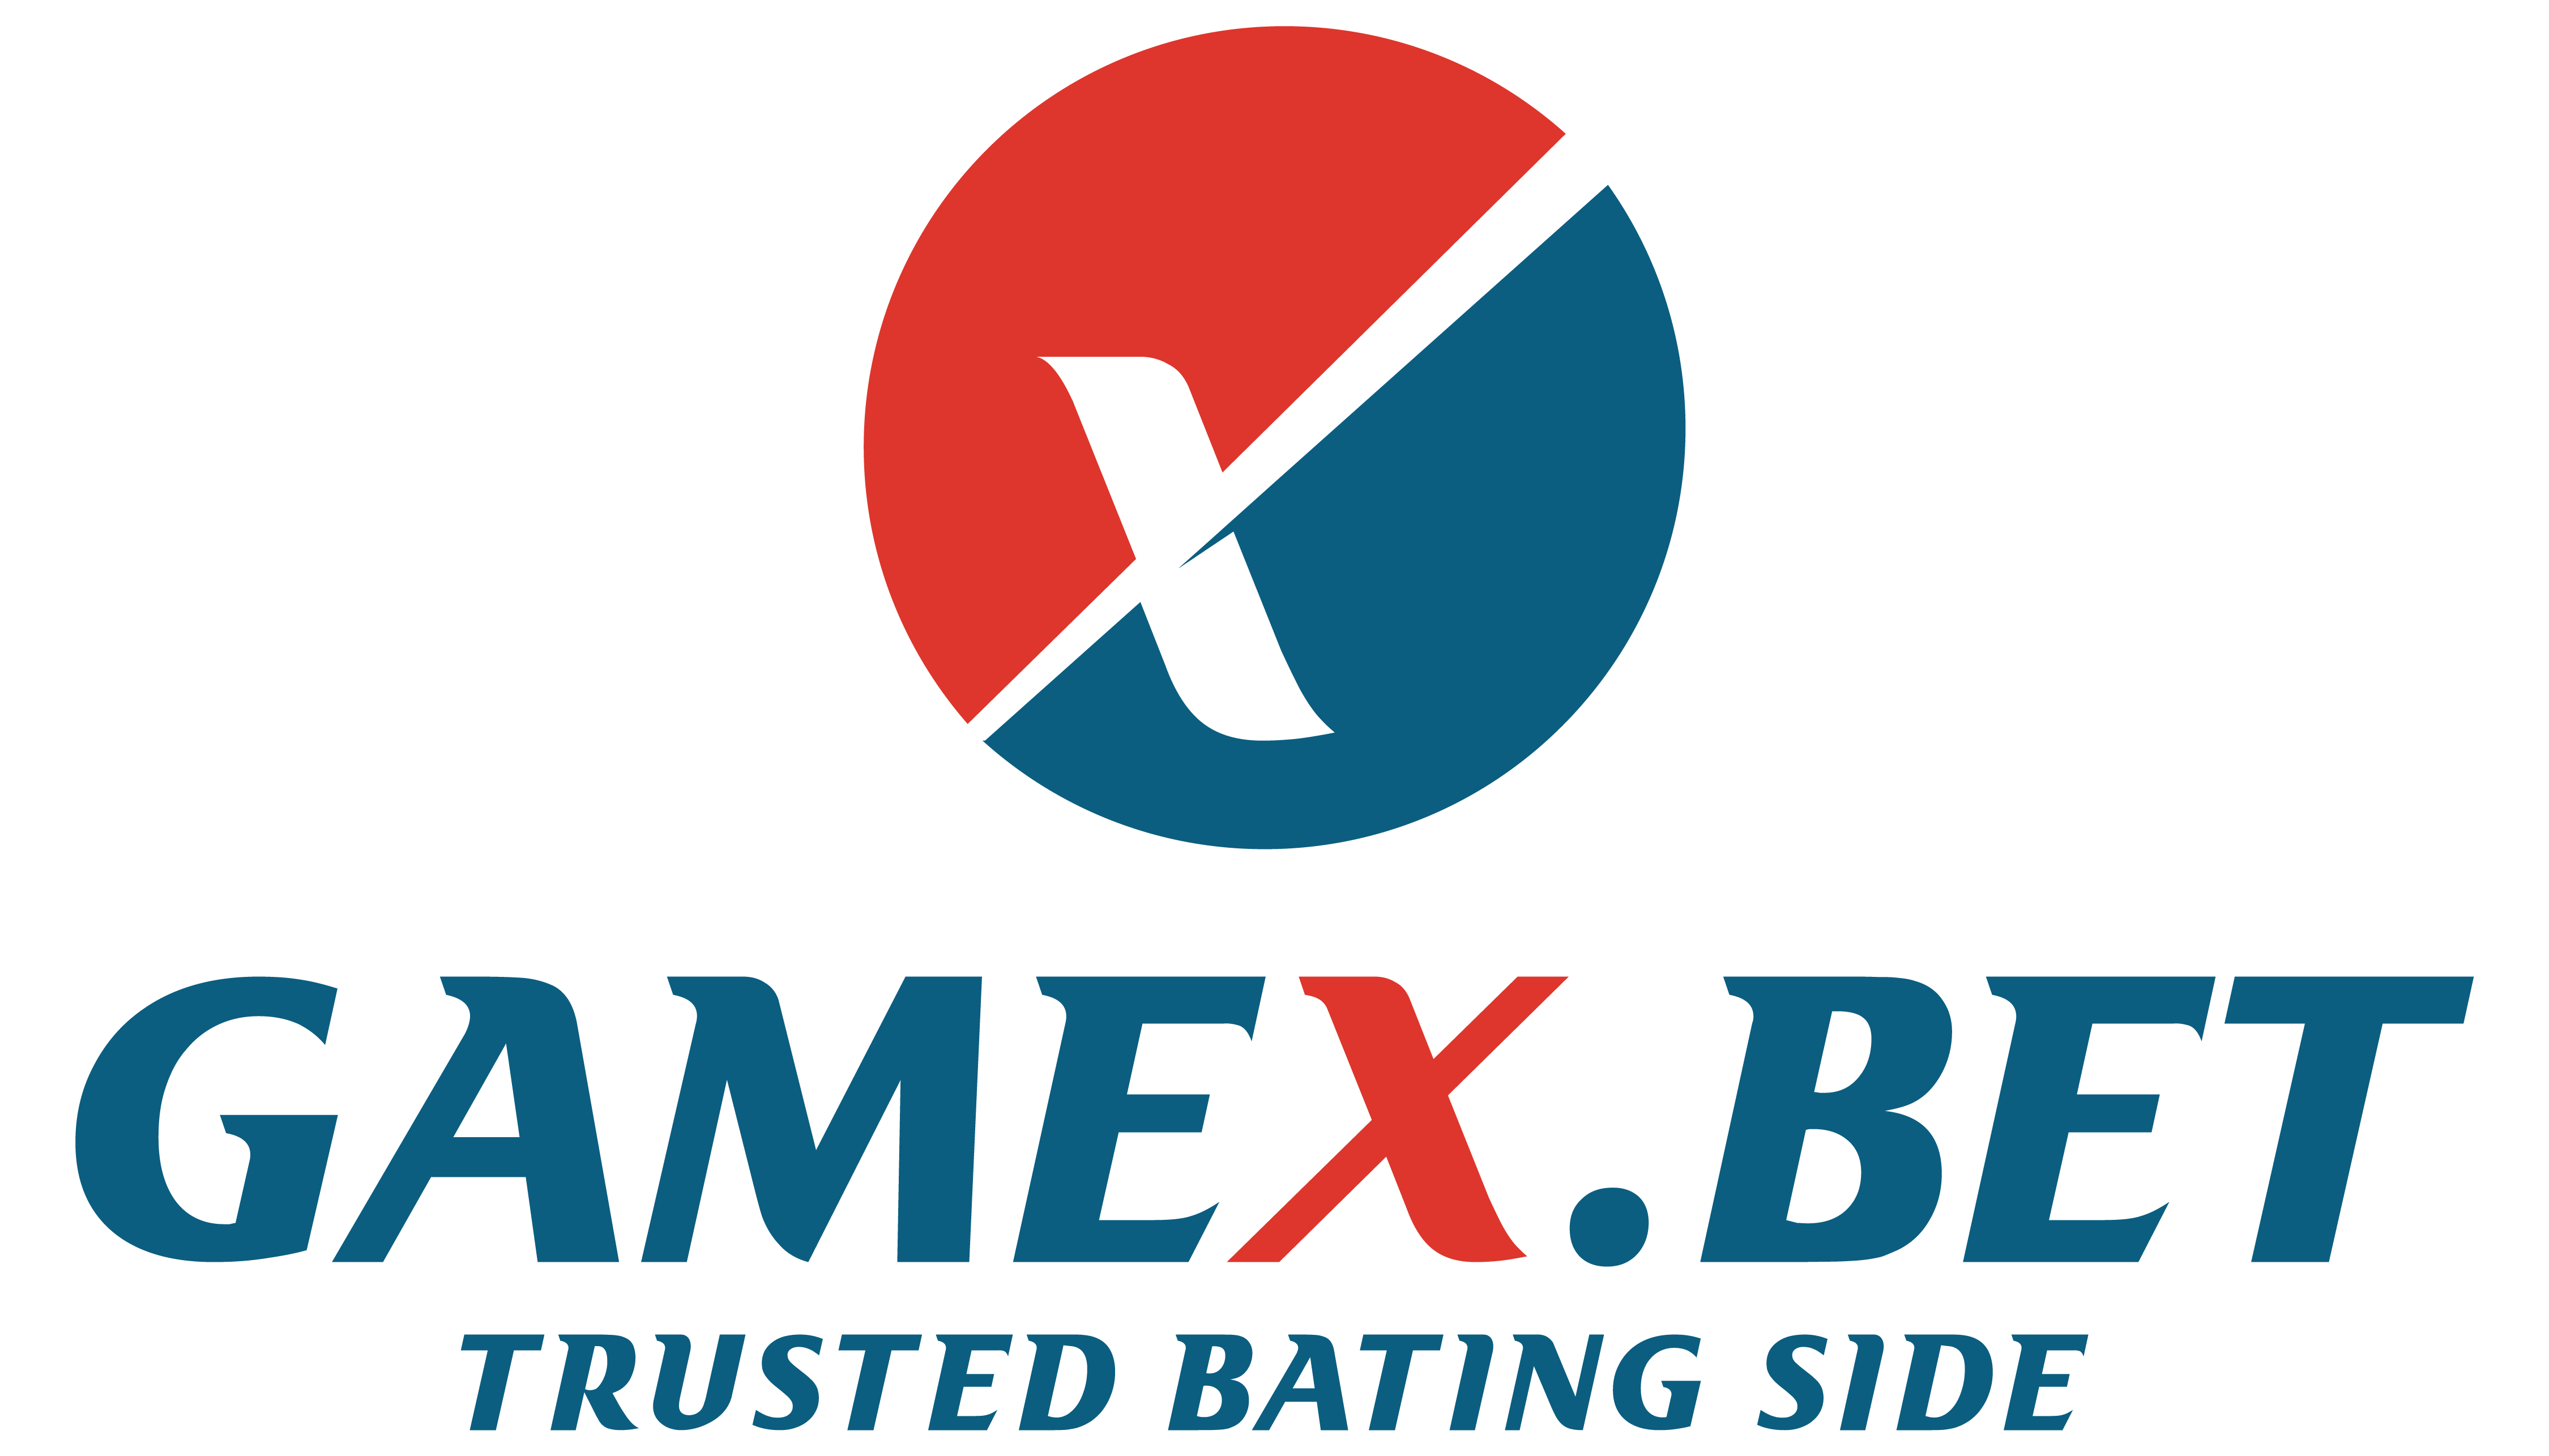 Gamex247 logo